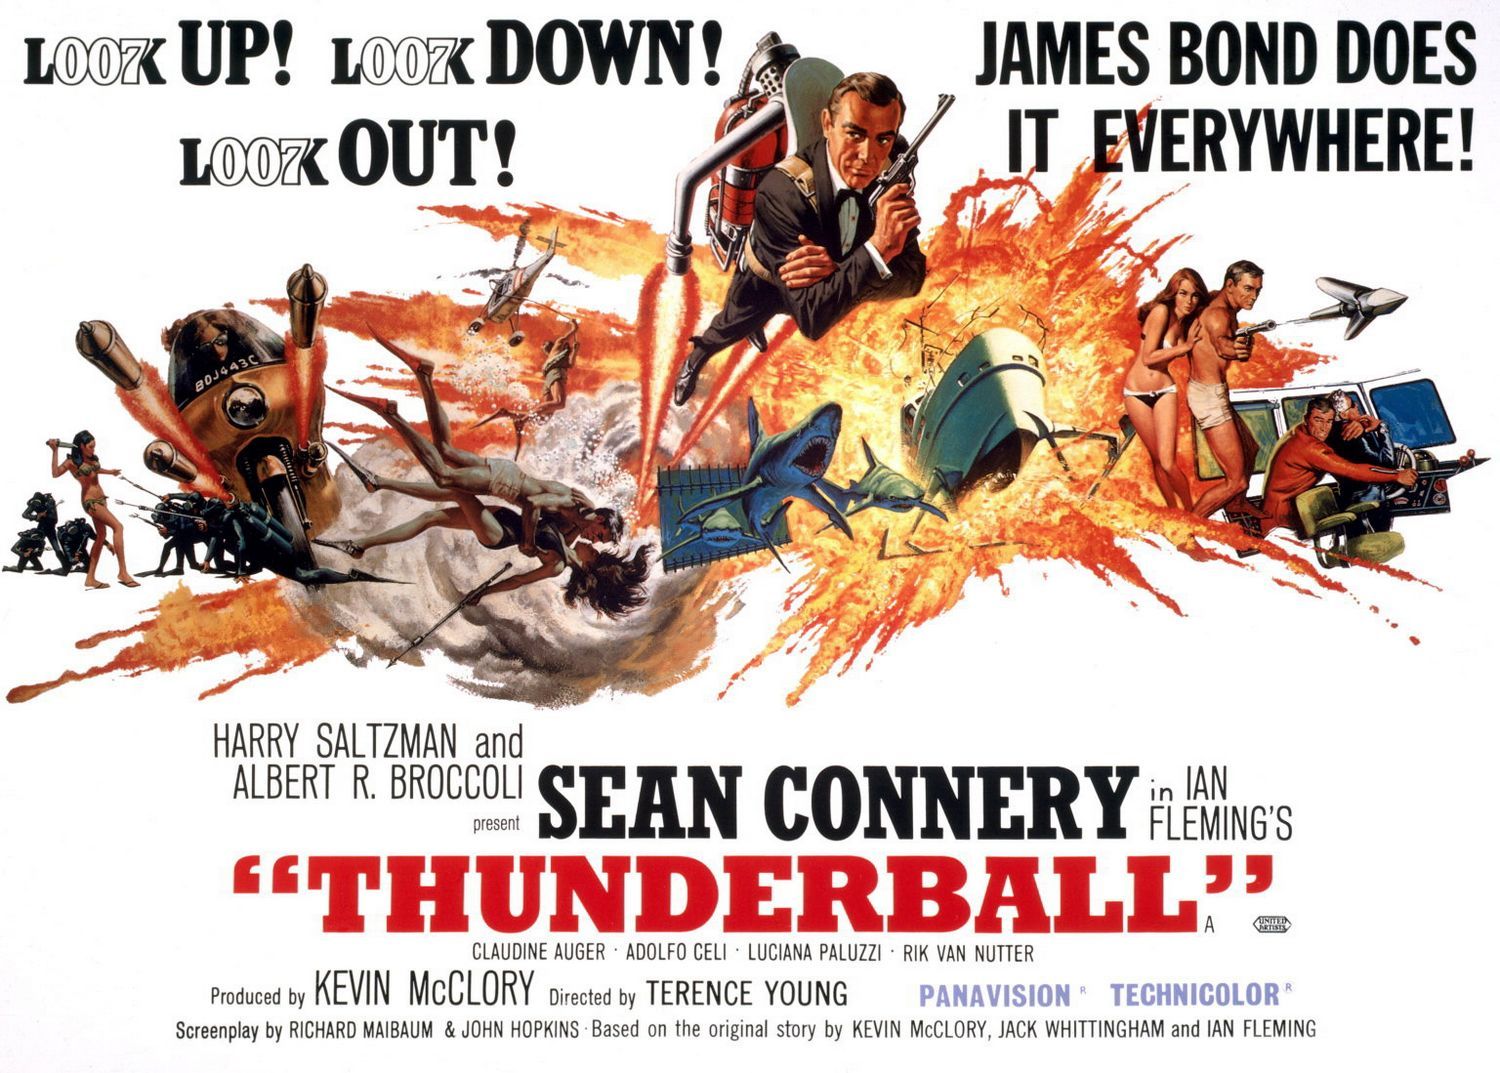 Bondcast 2.0 - 04 - Thunderball (1965)